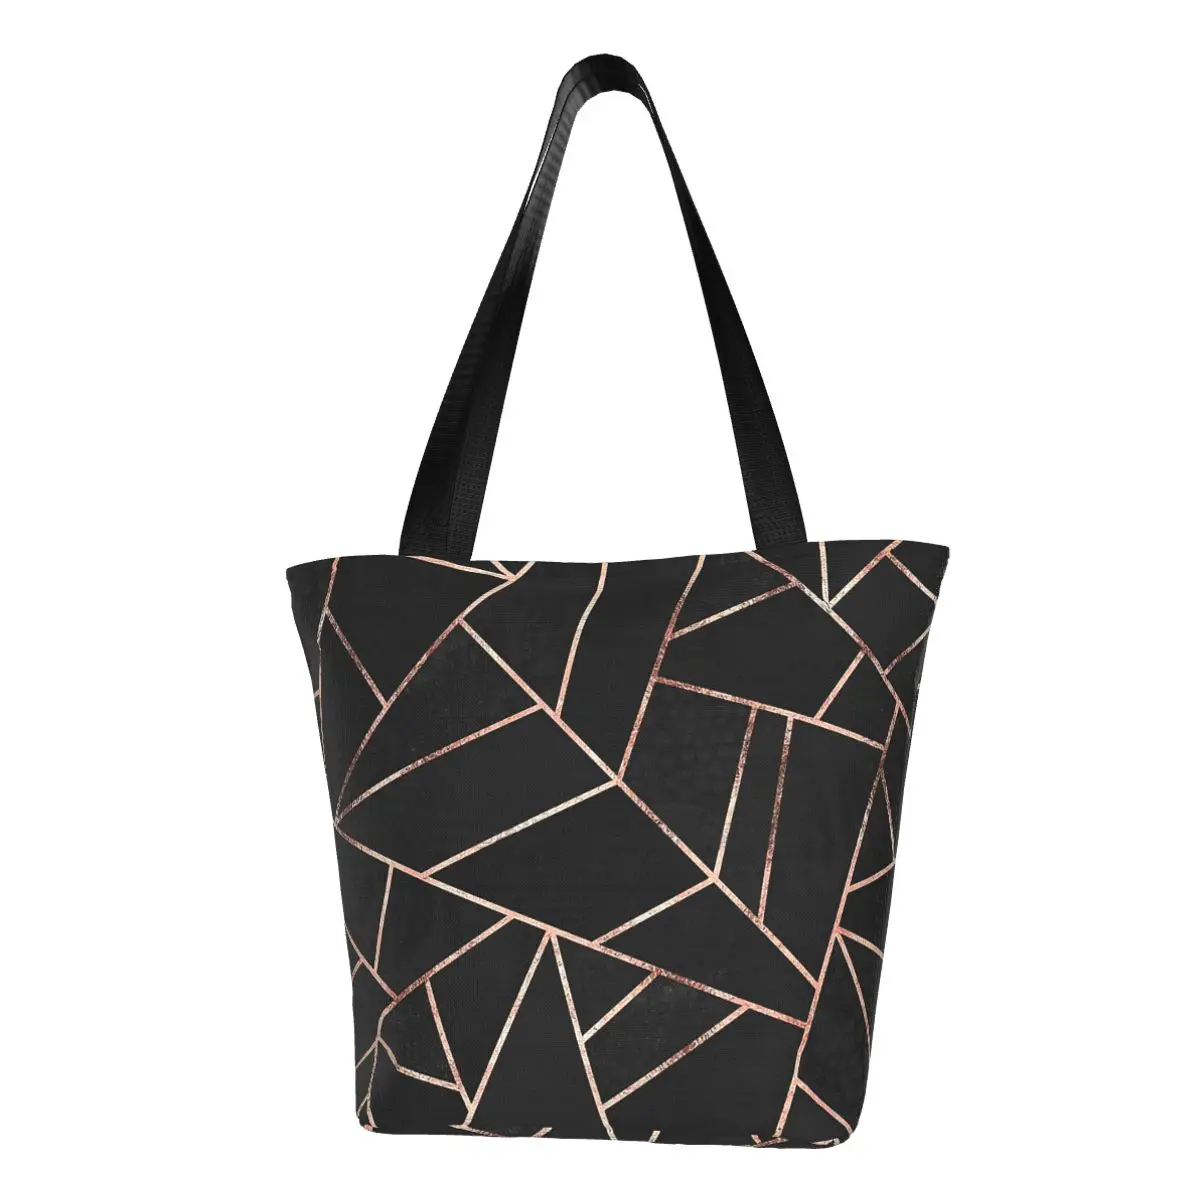 Black And Rose Gold Shopping Bag Aesthetic Cloth Outdoor Handbag Female Fashion Bags